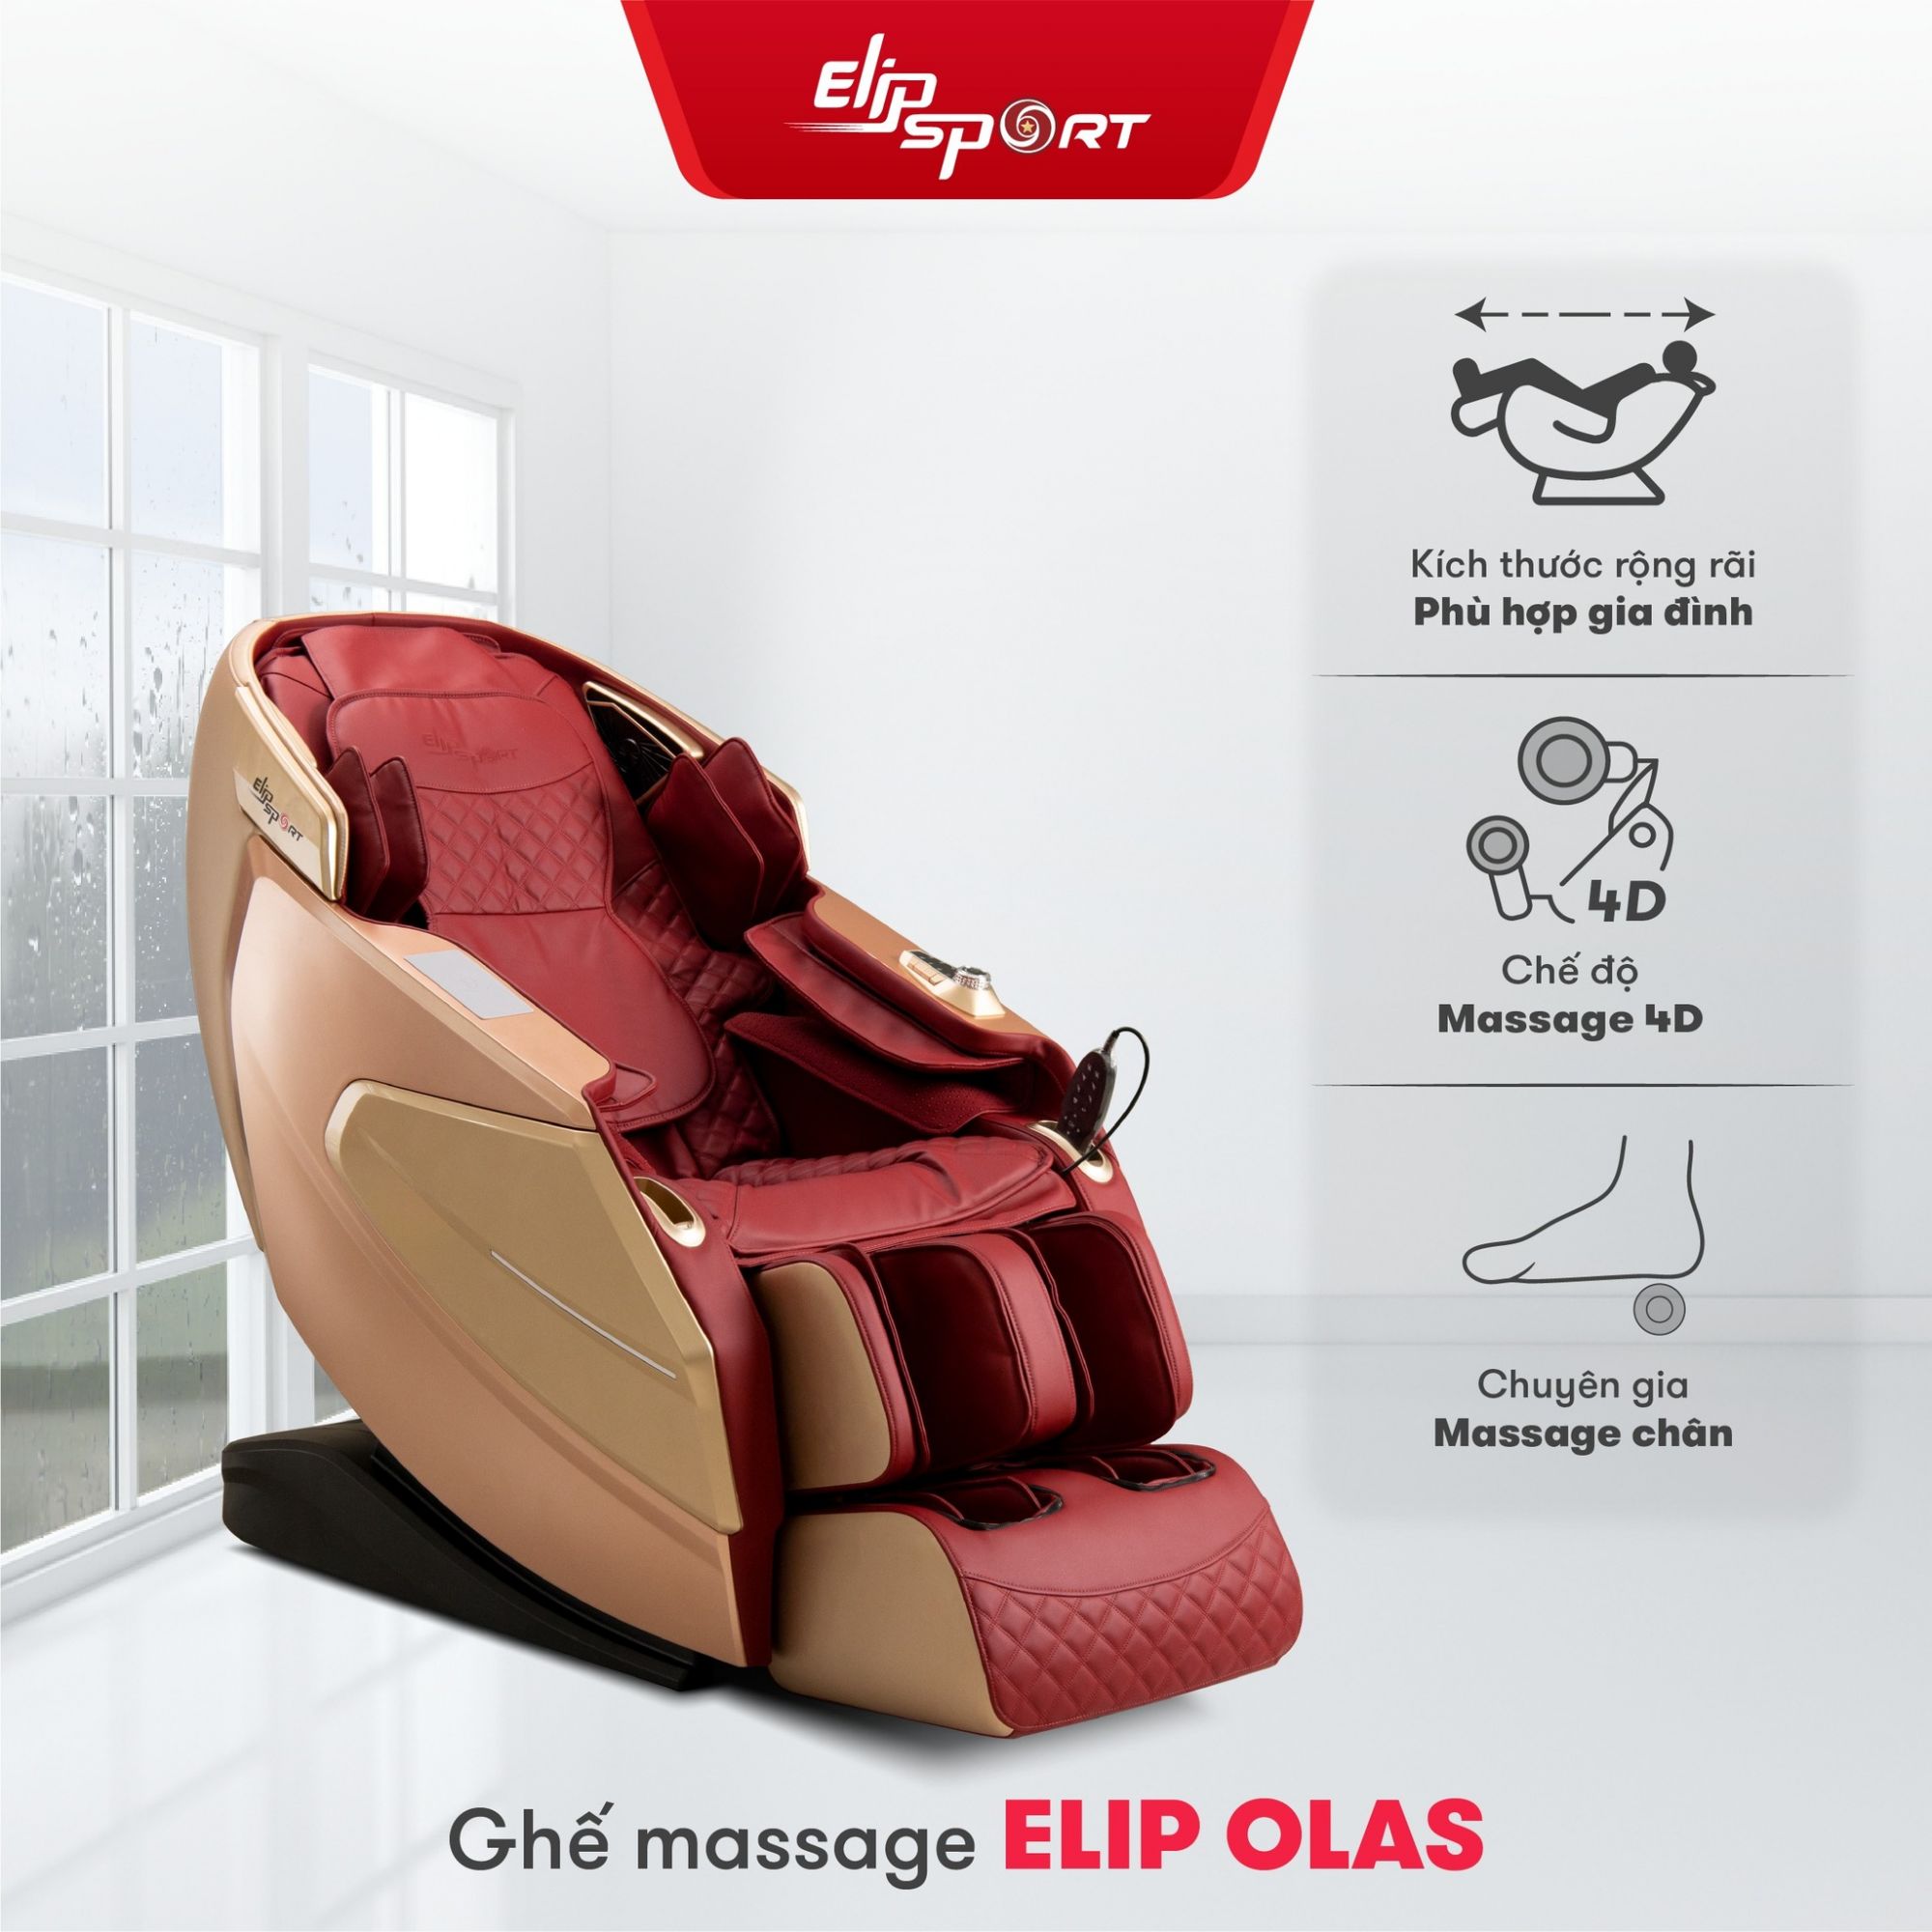 ghế massage bình tân ELIp olas